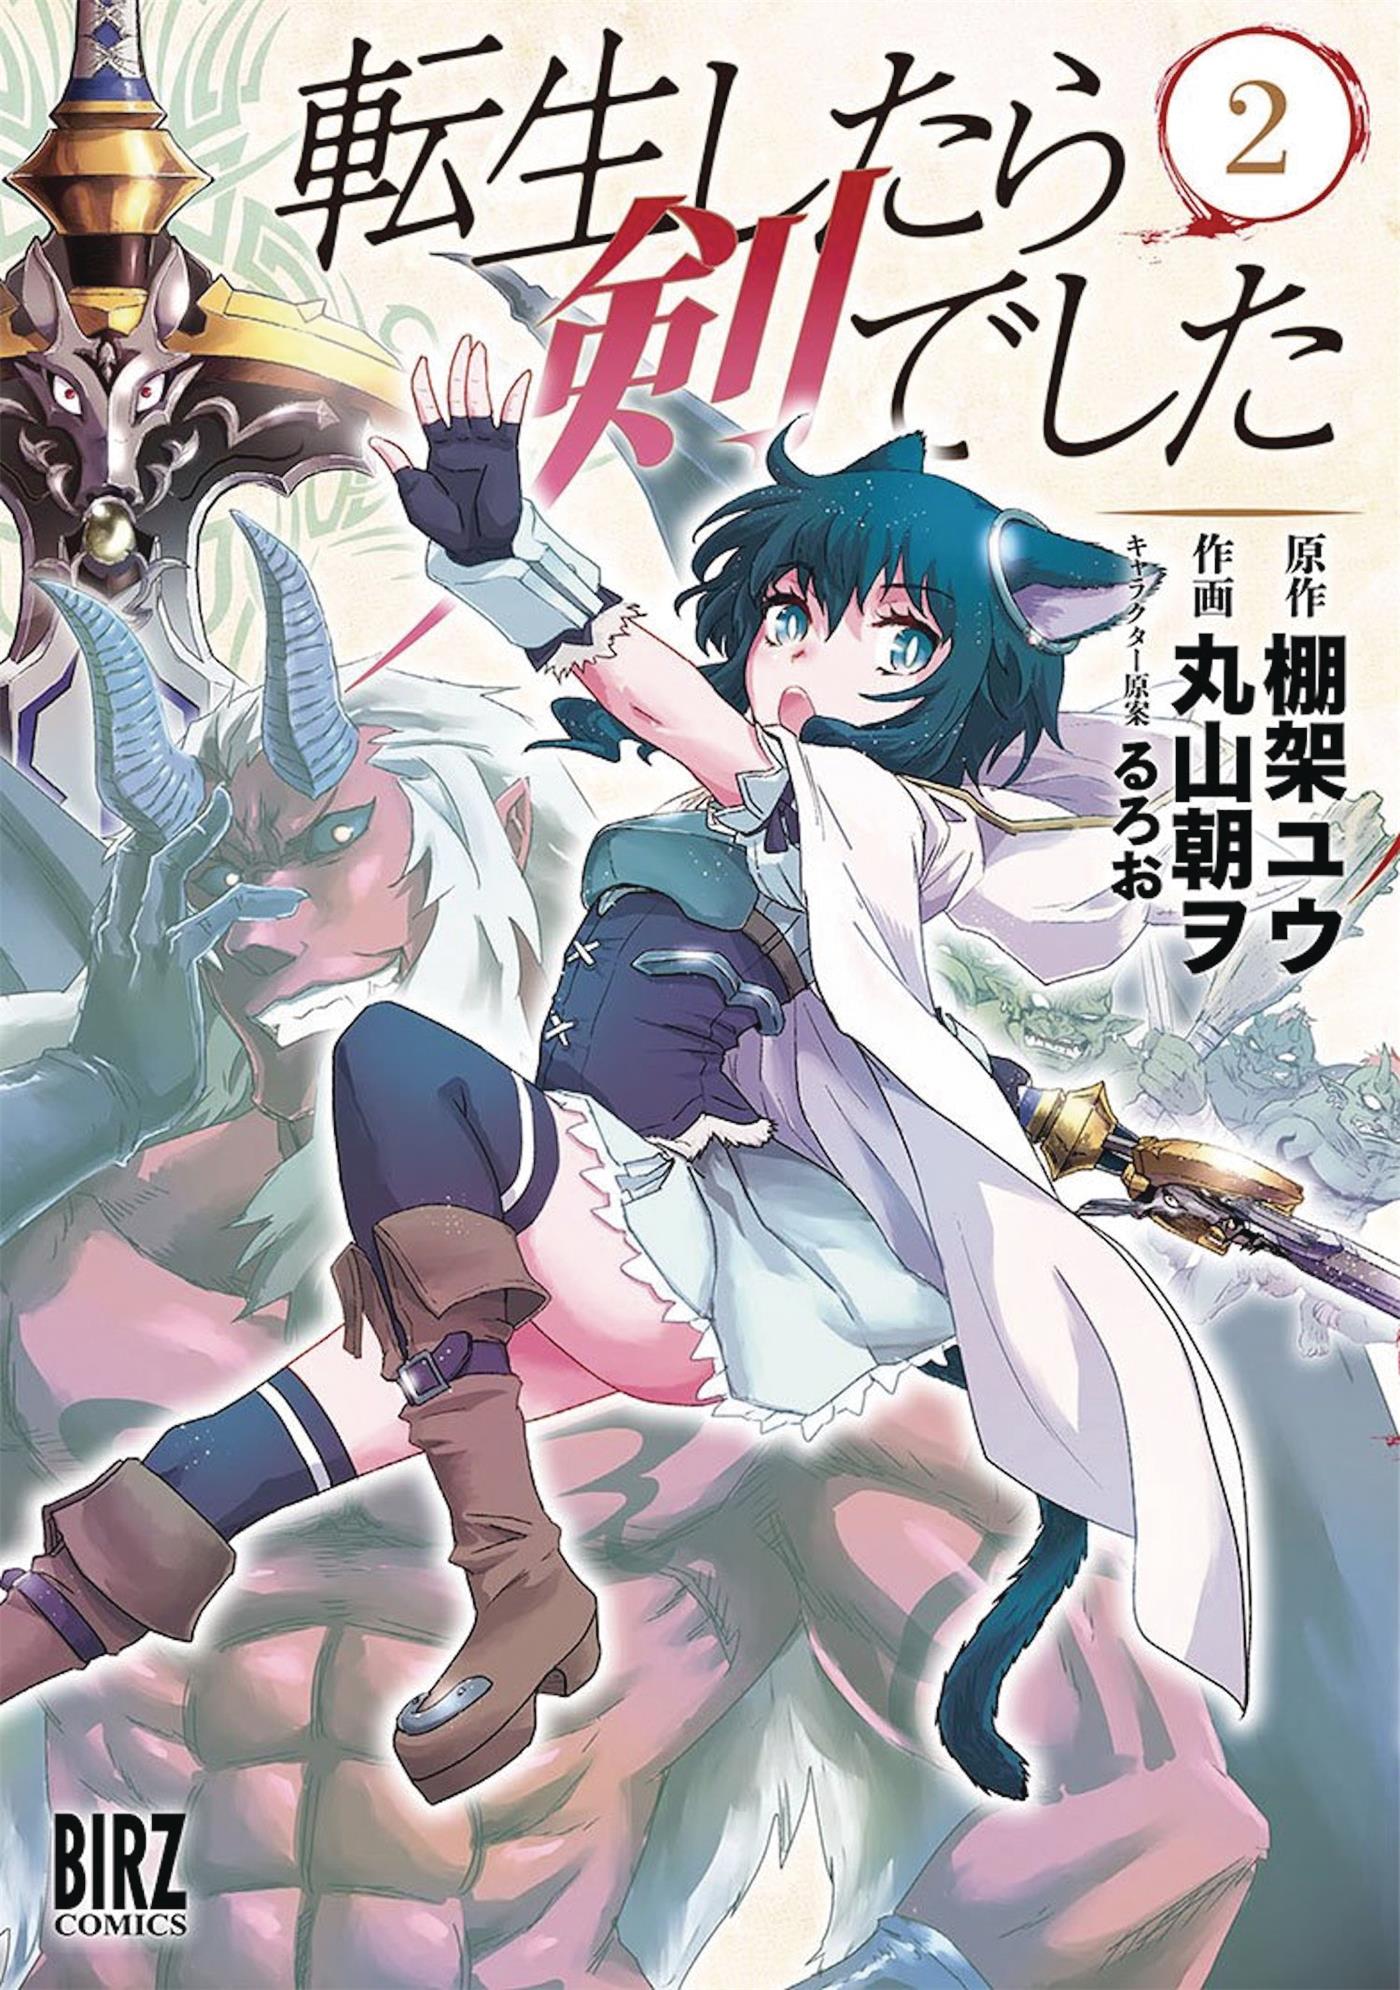 Manga Volume 2 Reincarnated As A Sword Wiki Fandom